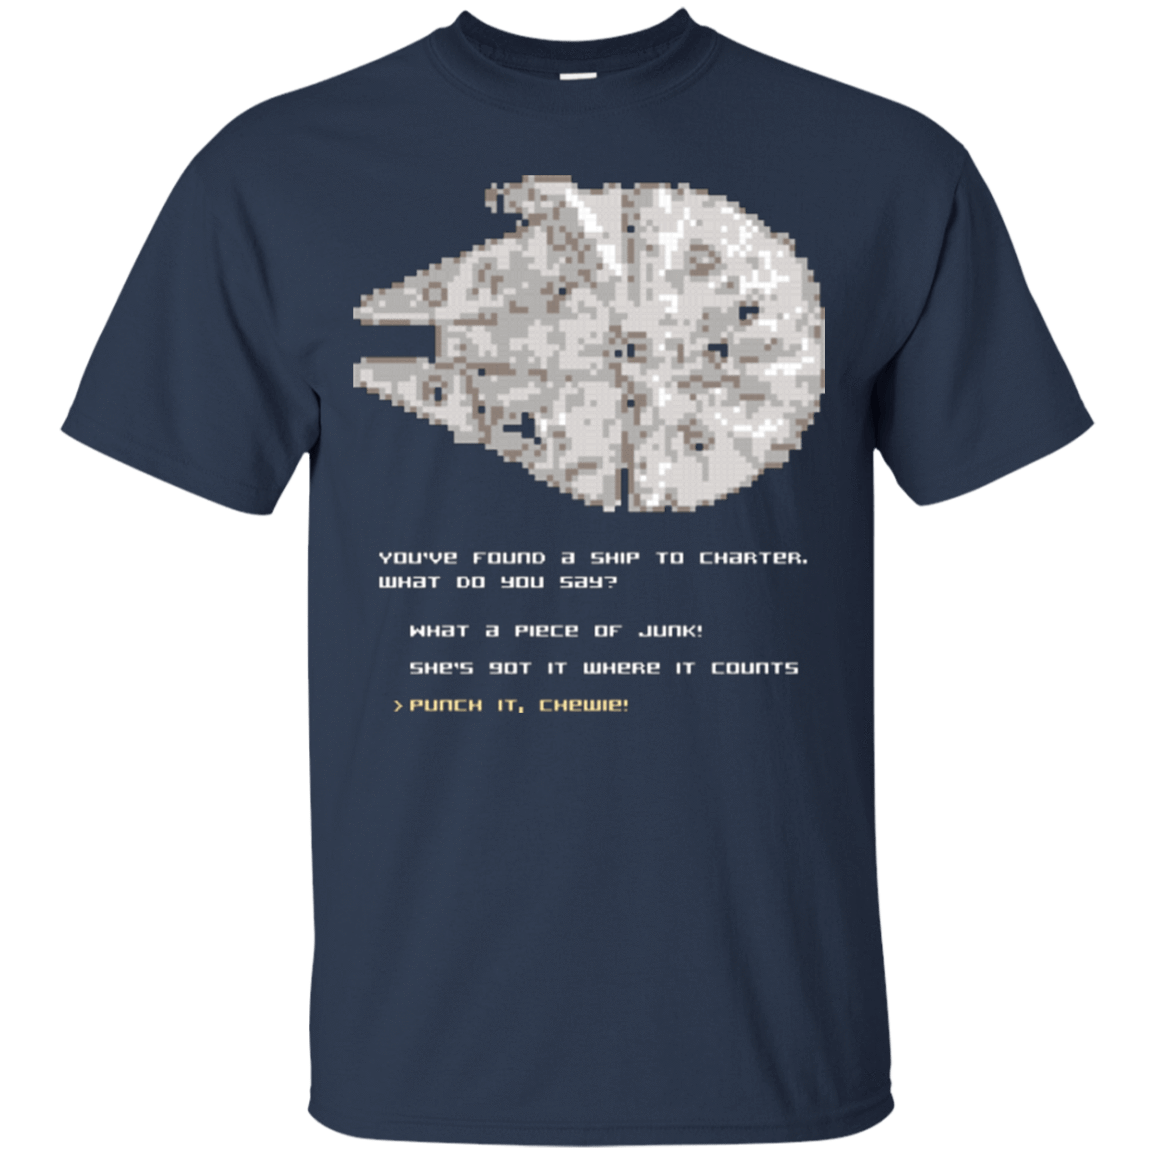 T-Shirts Navy / Small 8-Bit Charter T-Shirt